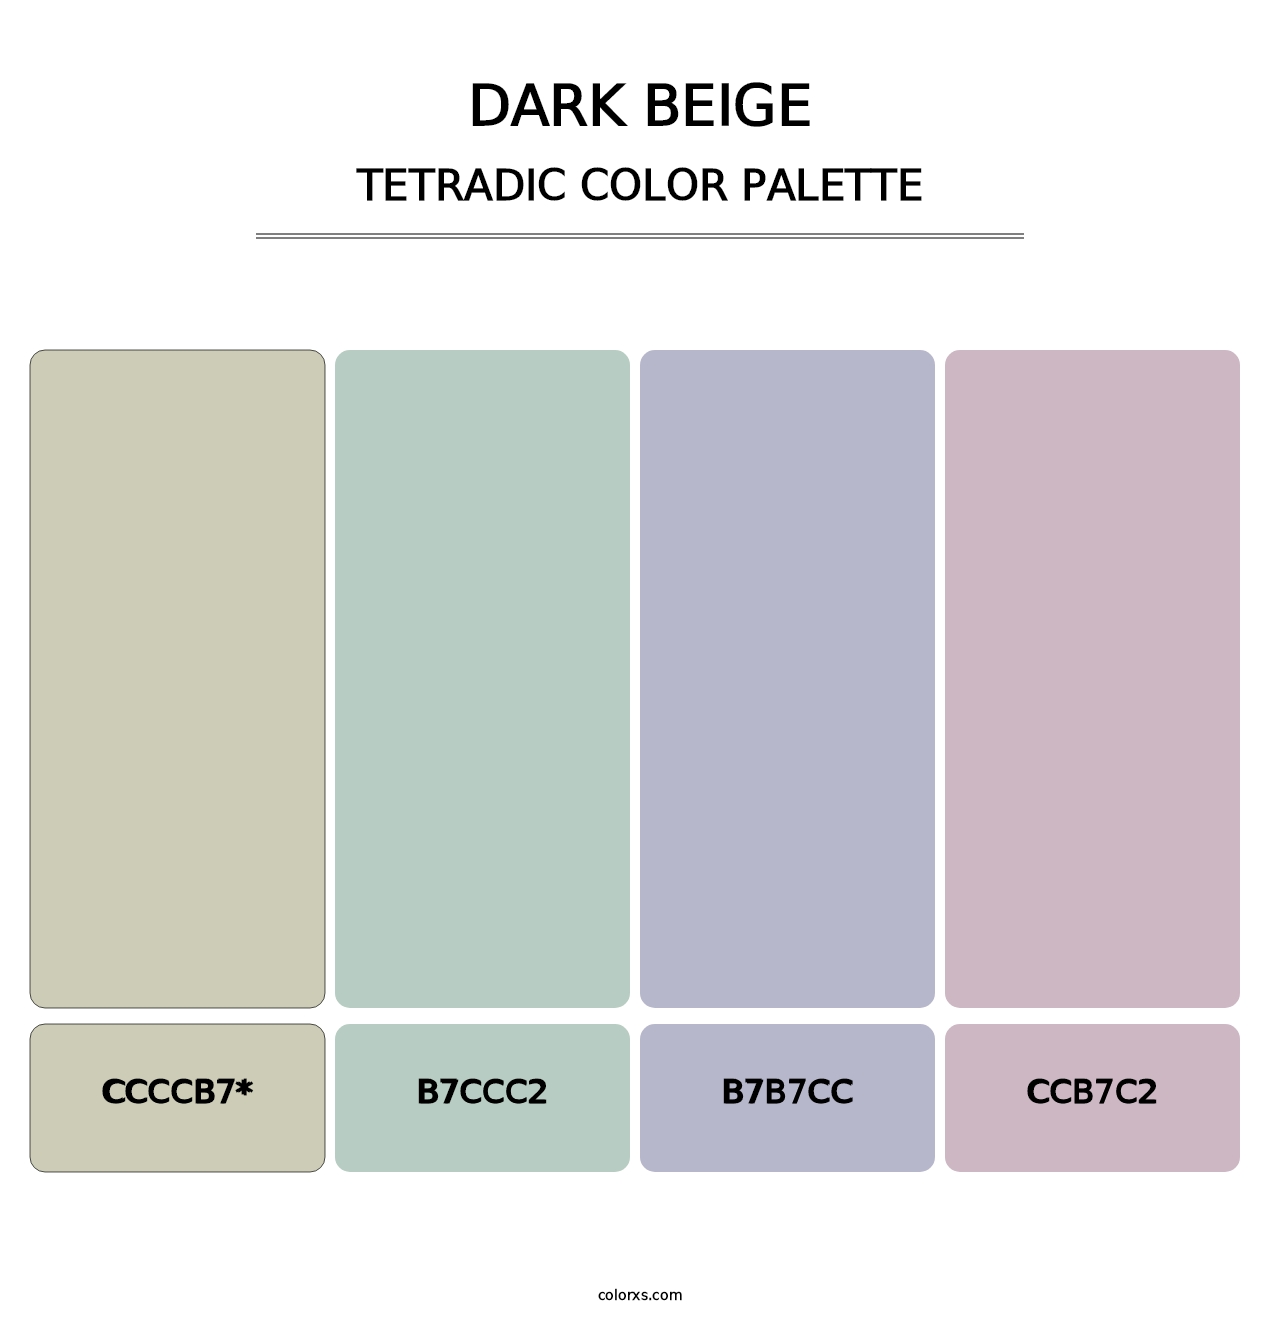 Dark Beige - Tetradic Color Palette